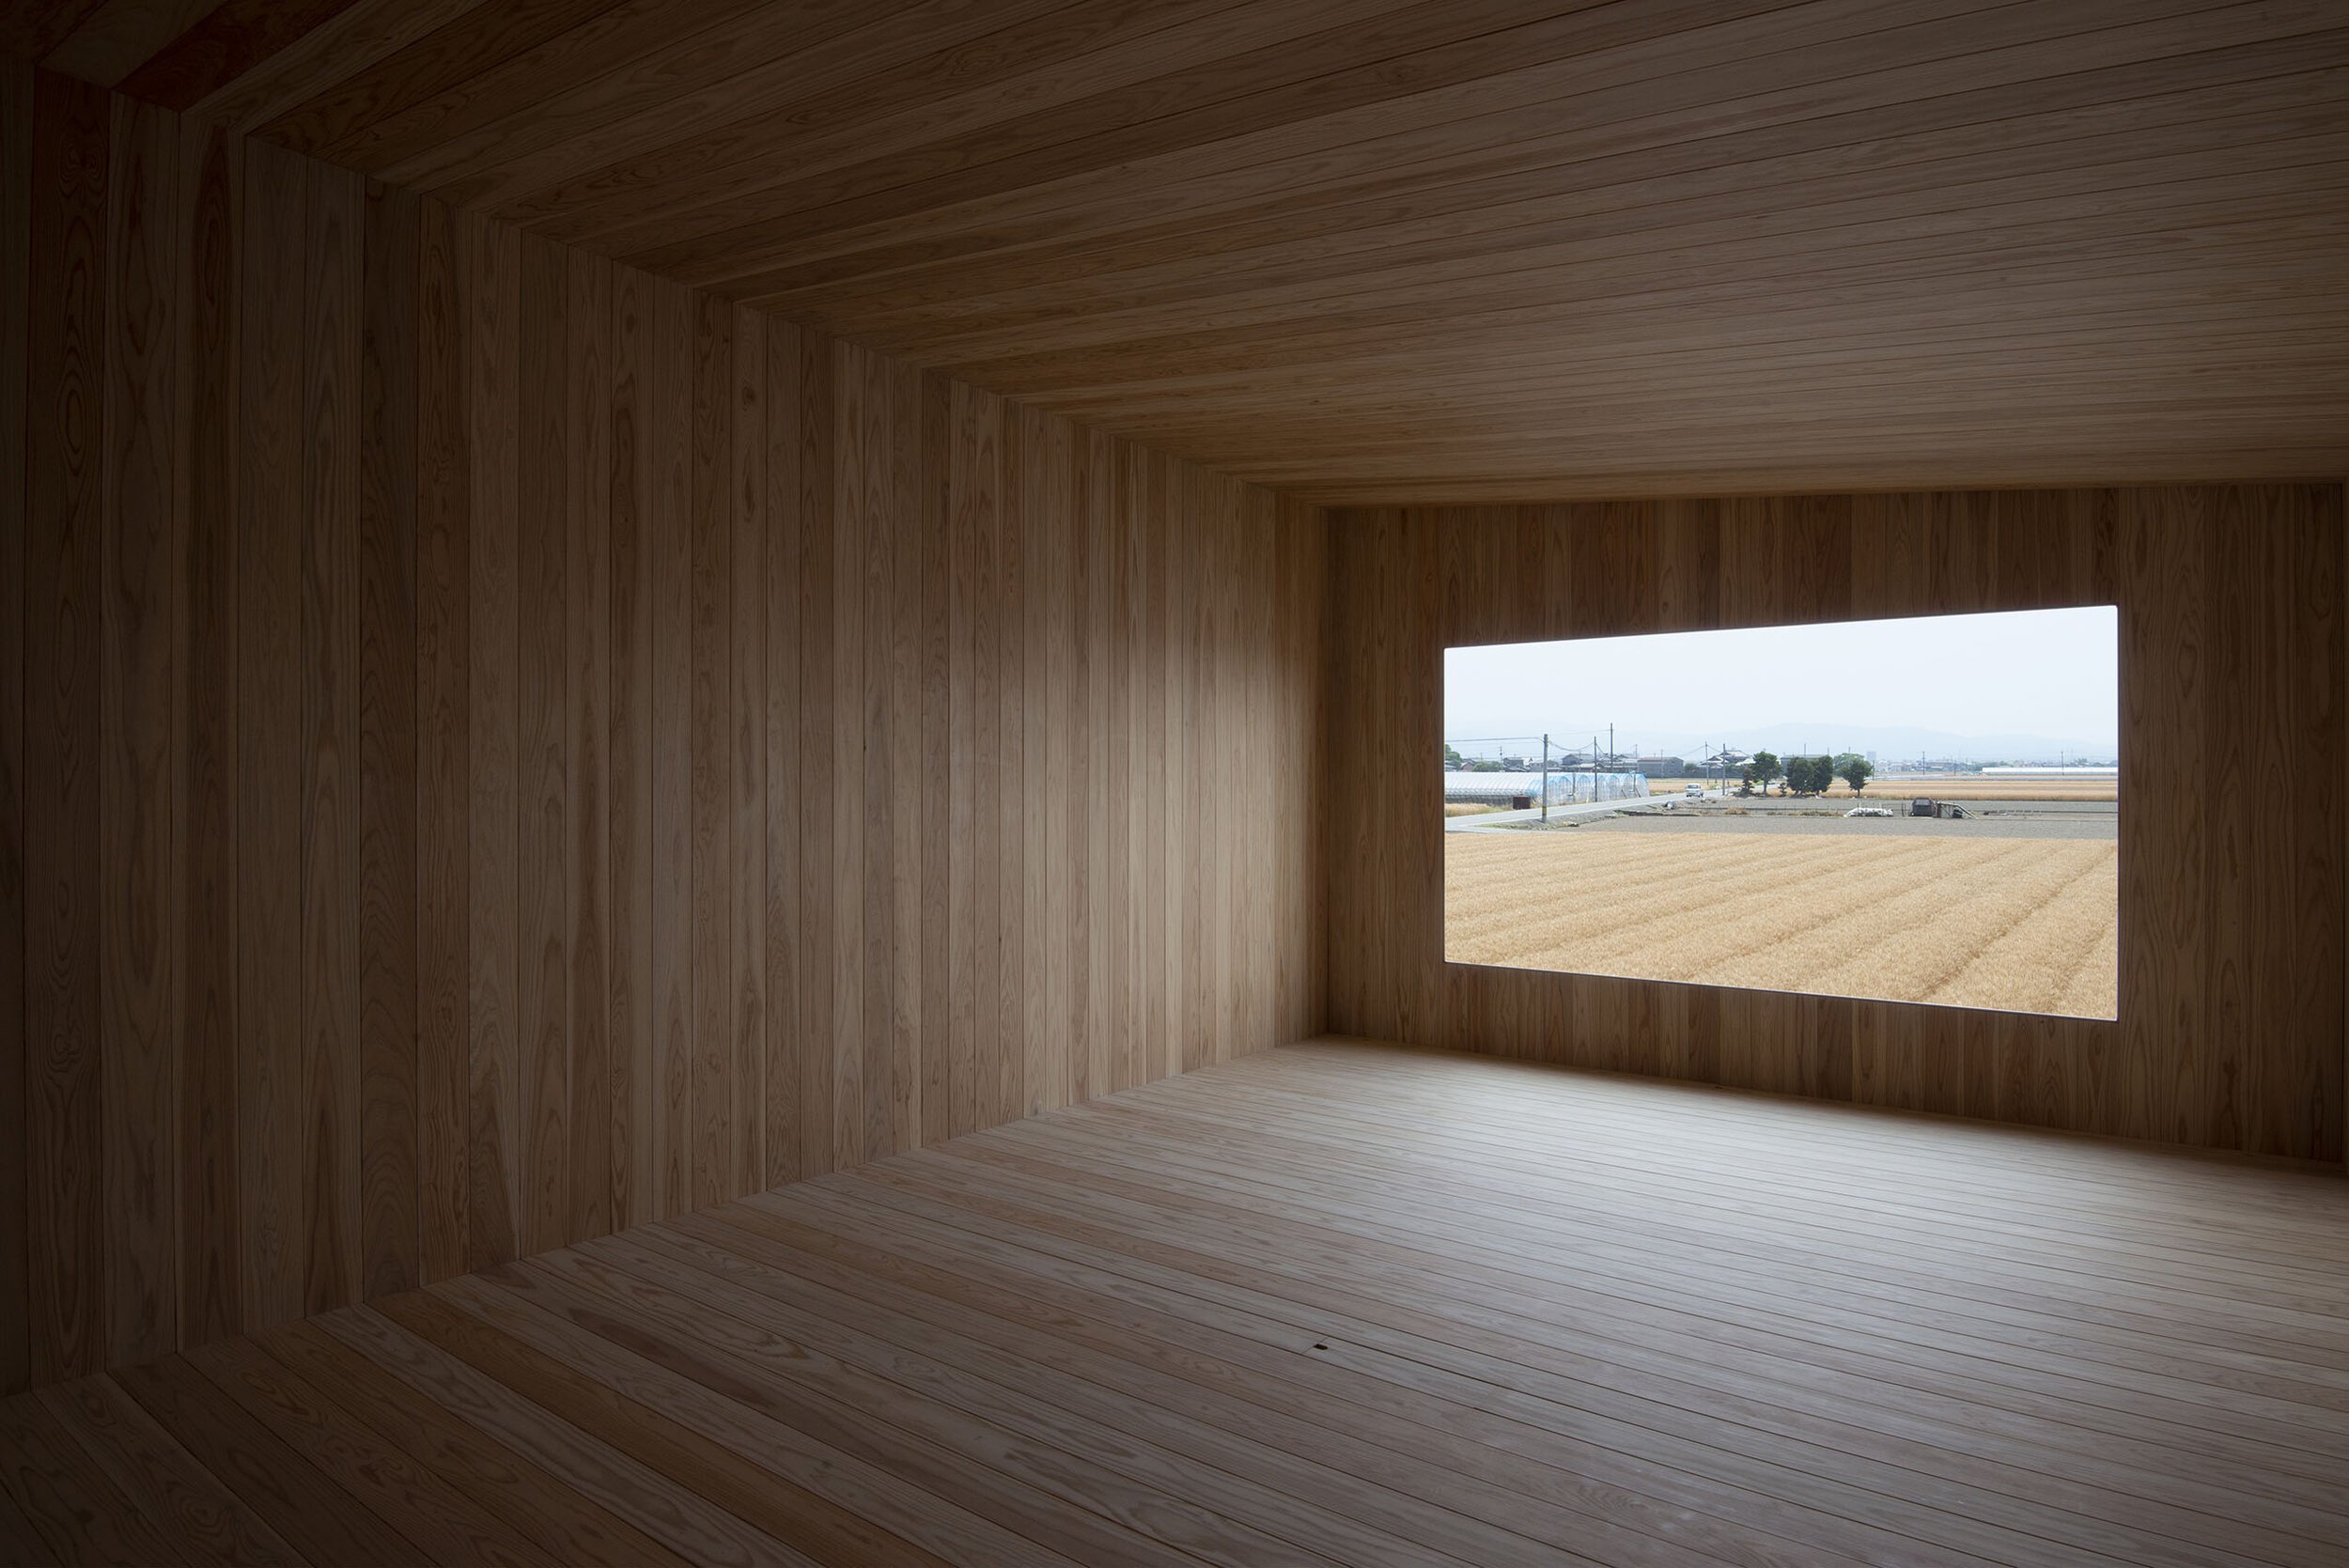  TORU SHIMOKAWA architectsの下川徹がインテリアデザインを手掛けた福岡のNACA GALLERY。床、壁、天井の目地は徹底的に揃えて施工された 